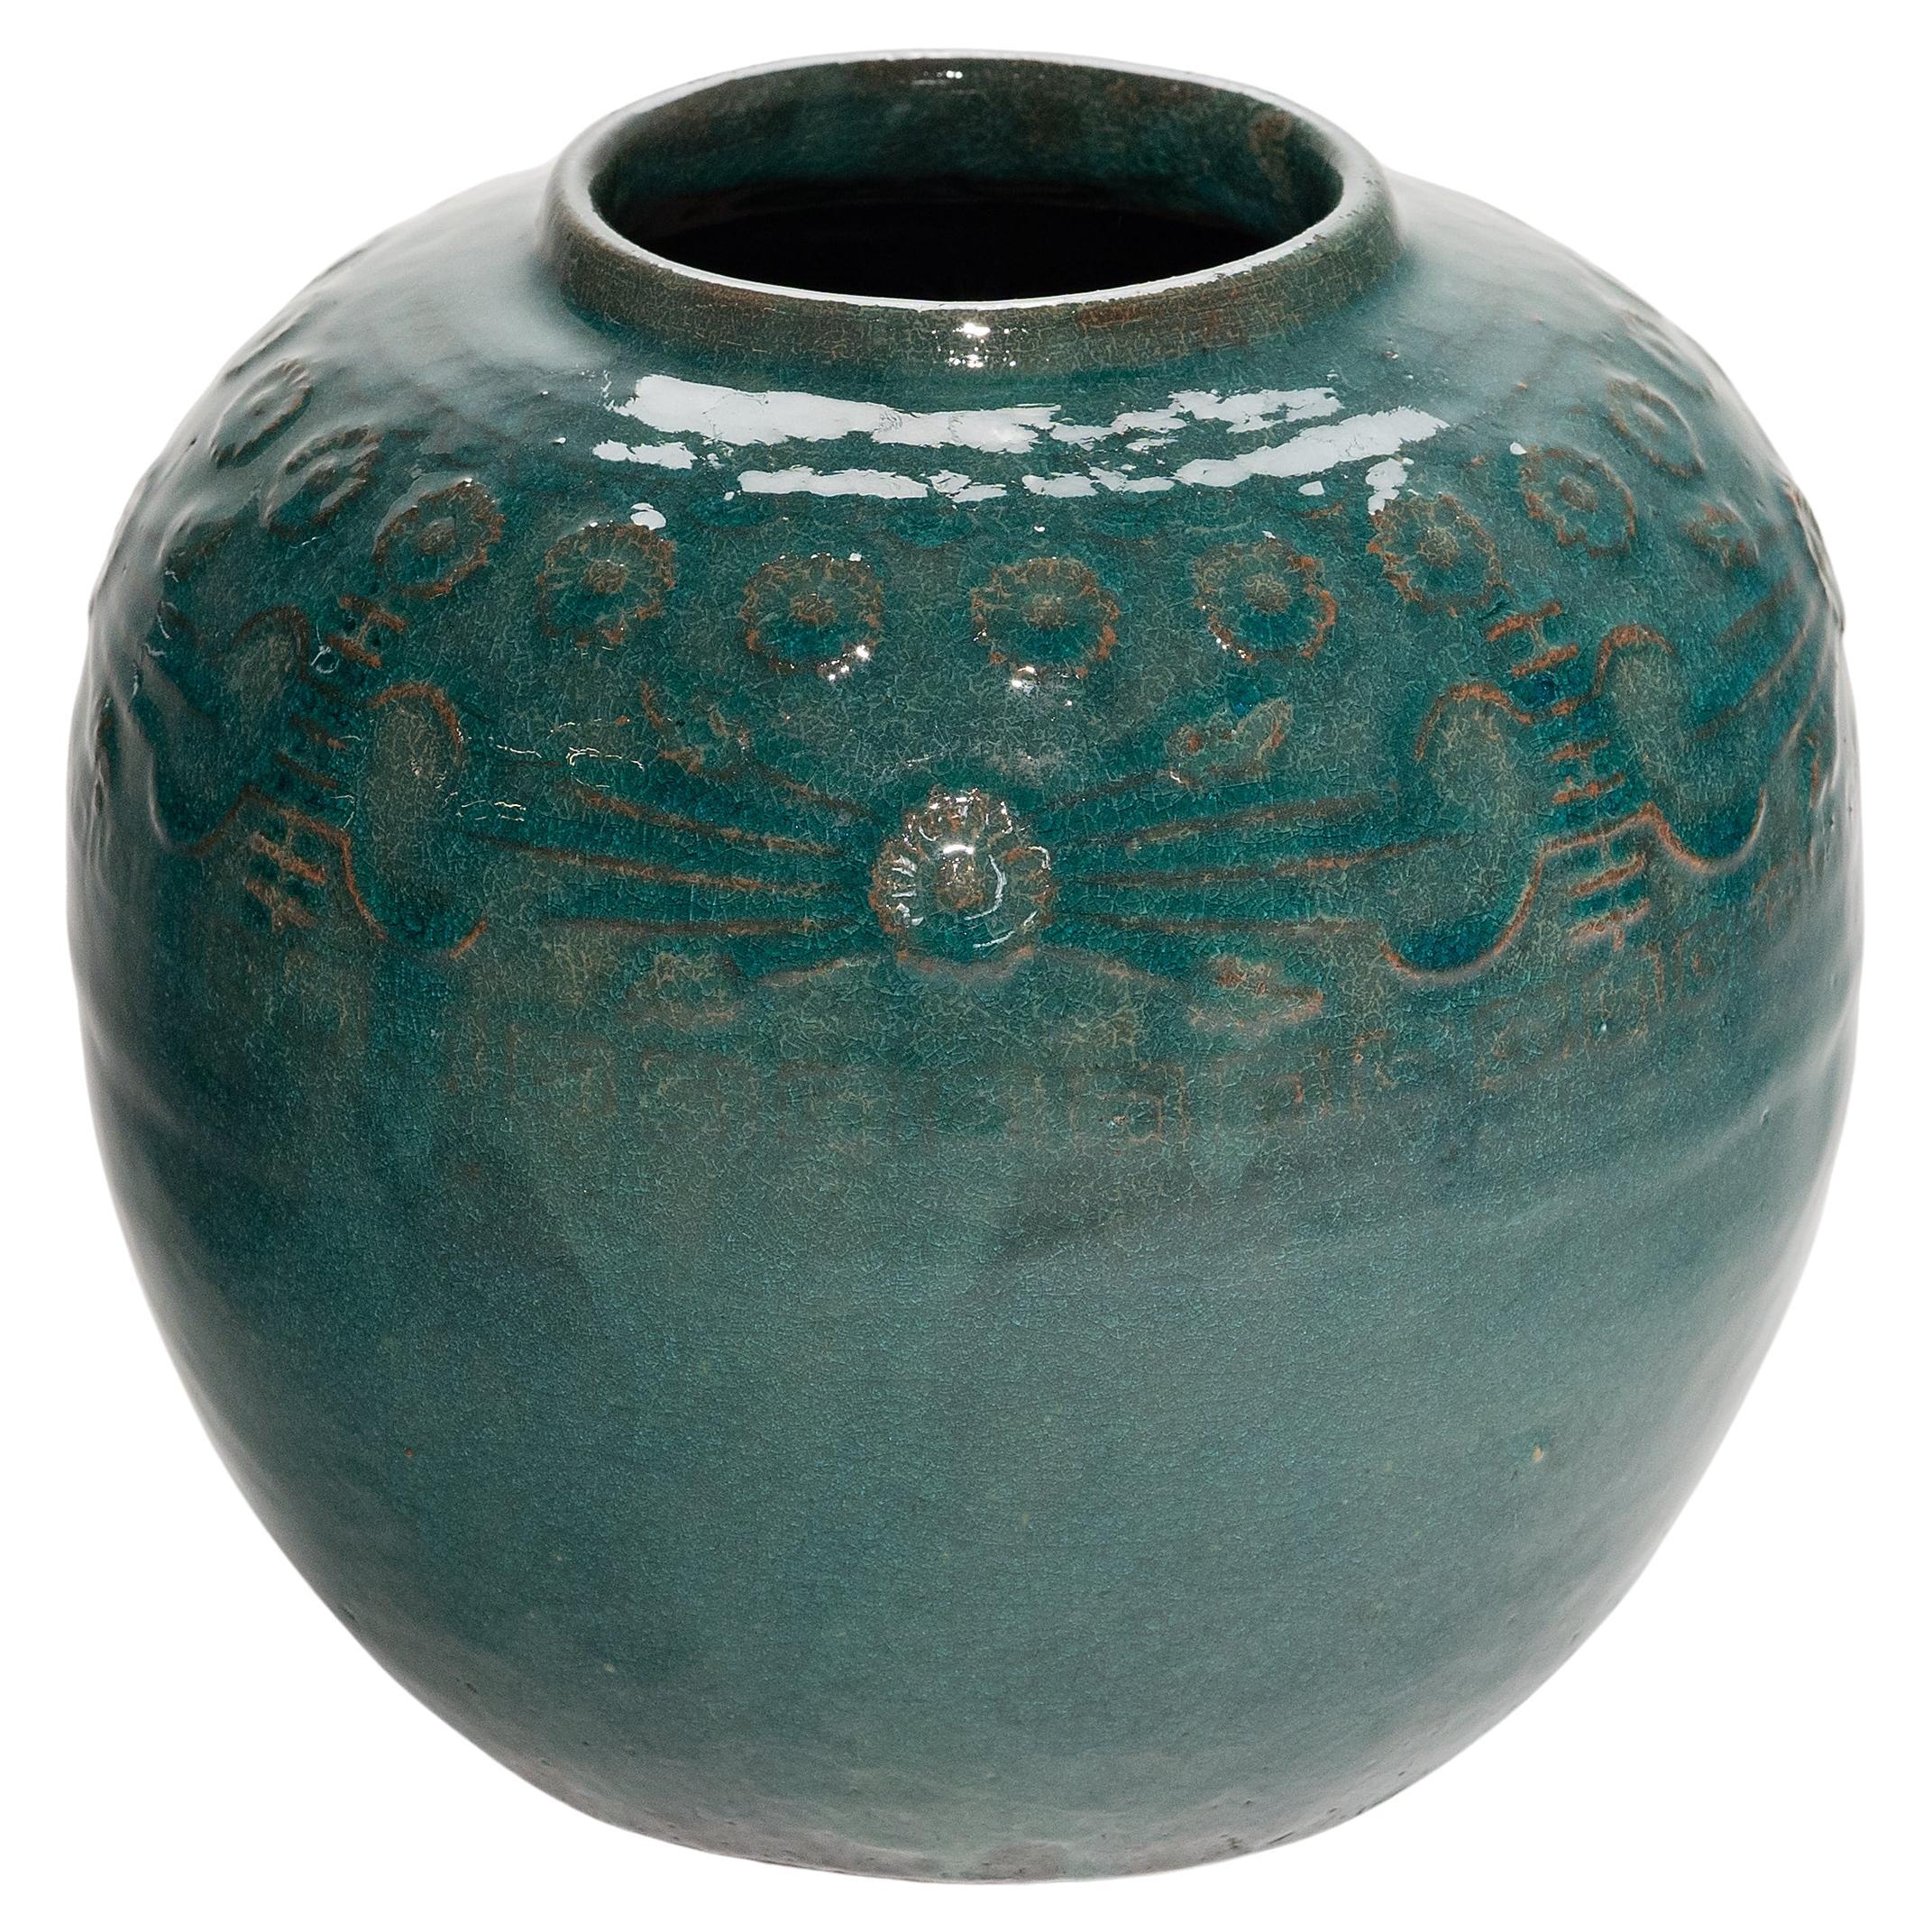 Chinese Jade Green Salt Jar, c. 1900